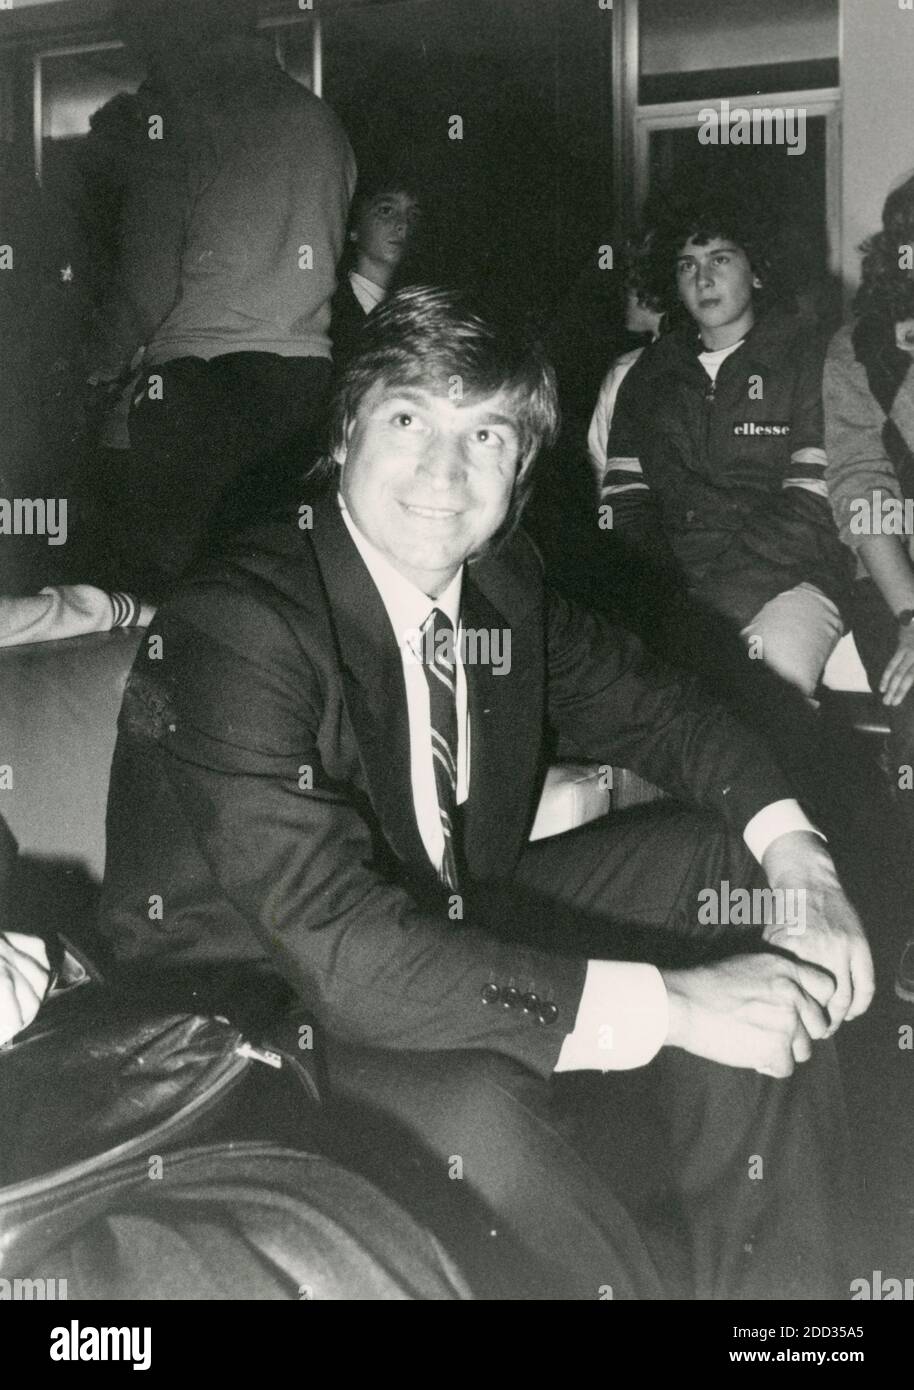 Italian  tennis player Vincenzo Franchitti, 1980s Stock Photo